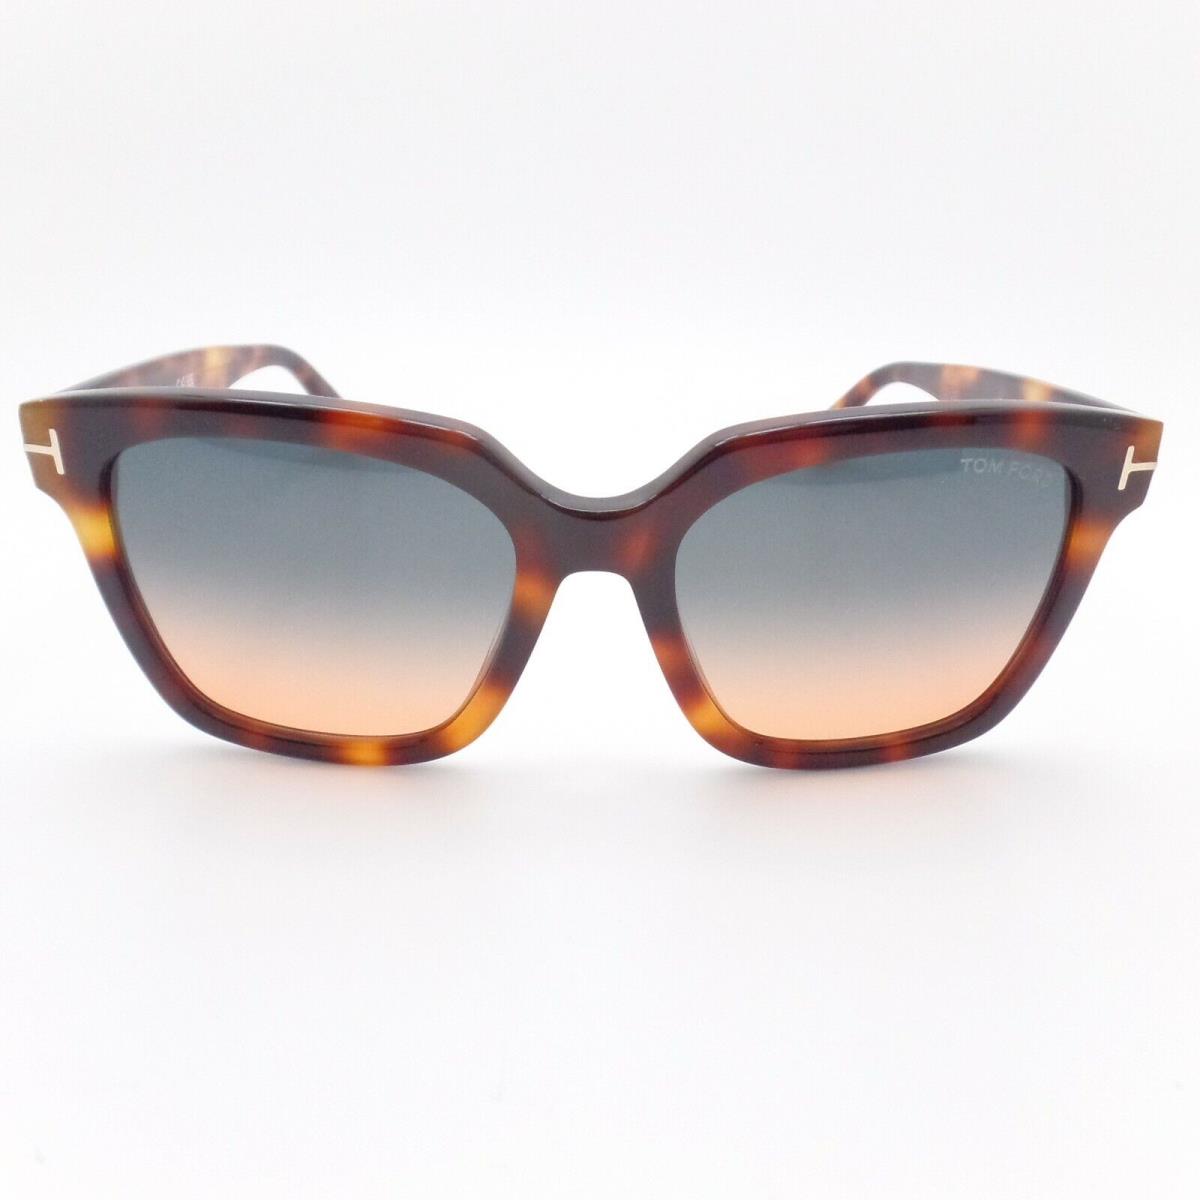 Tom Ford sunglasses Selby - Frame: Havana, Lens: Blue Teal Peach Fade 0